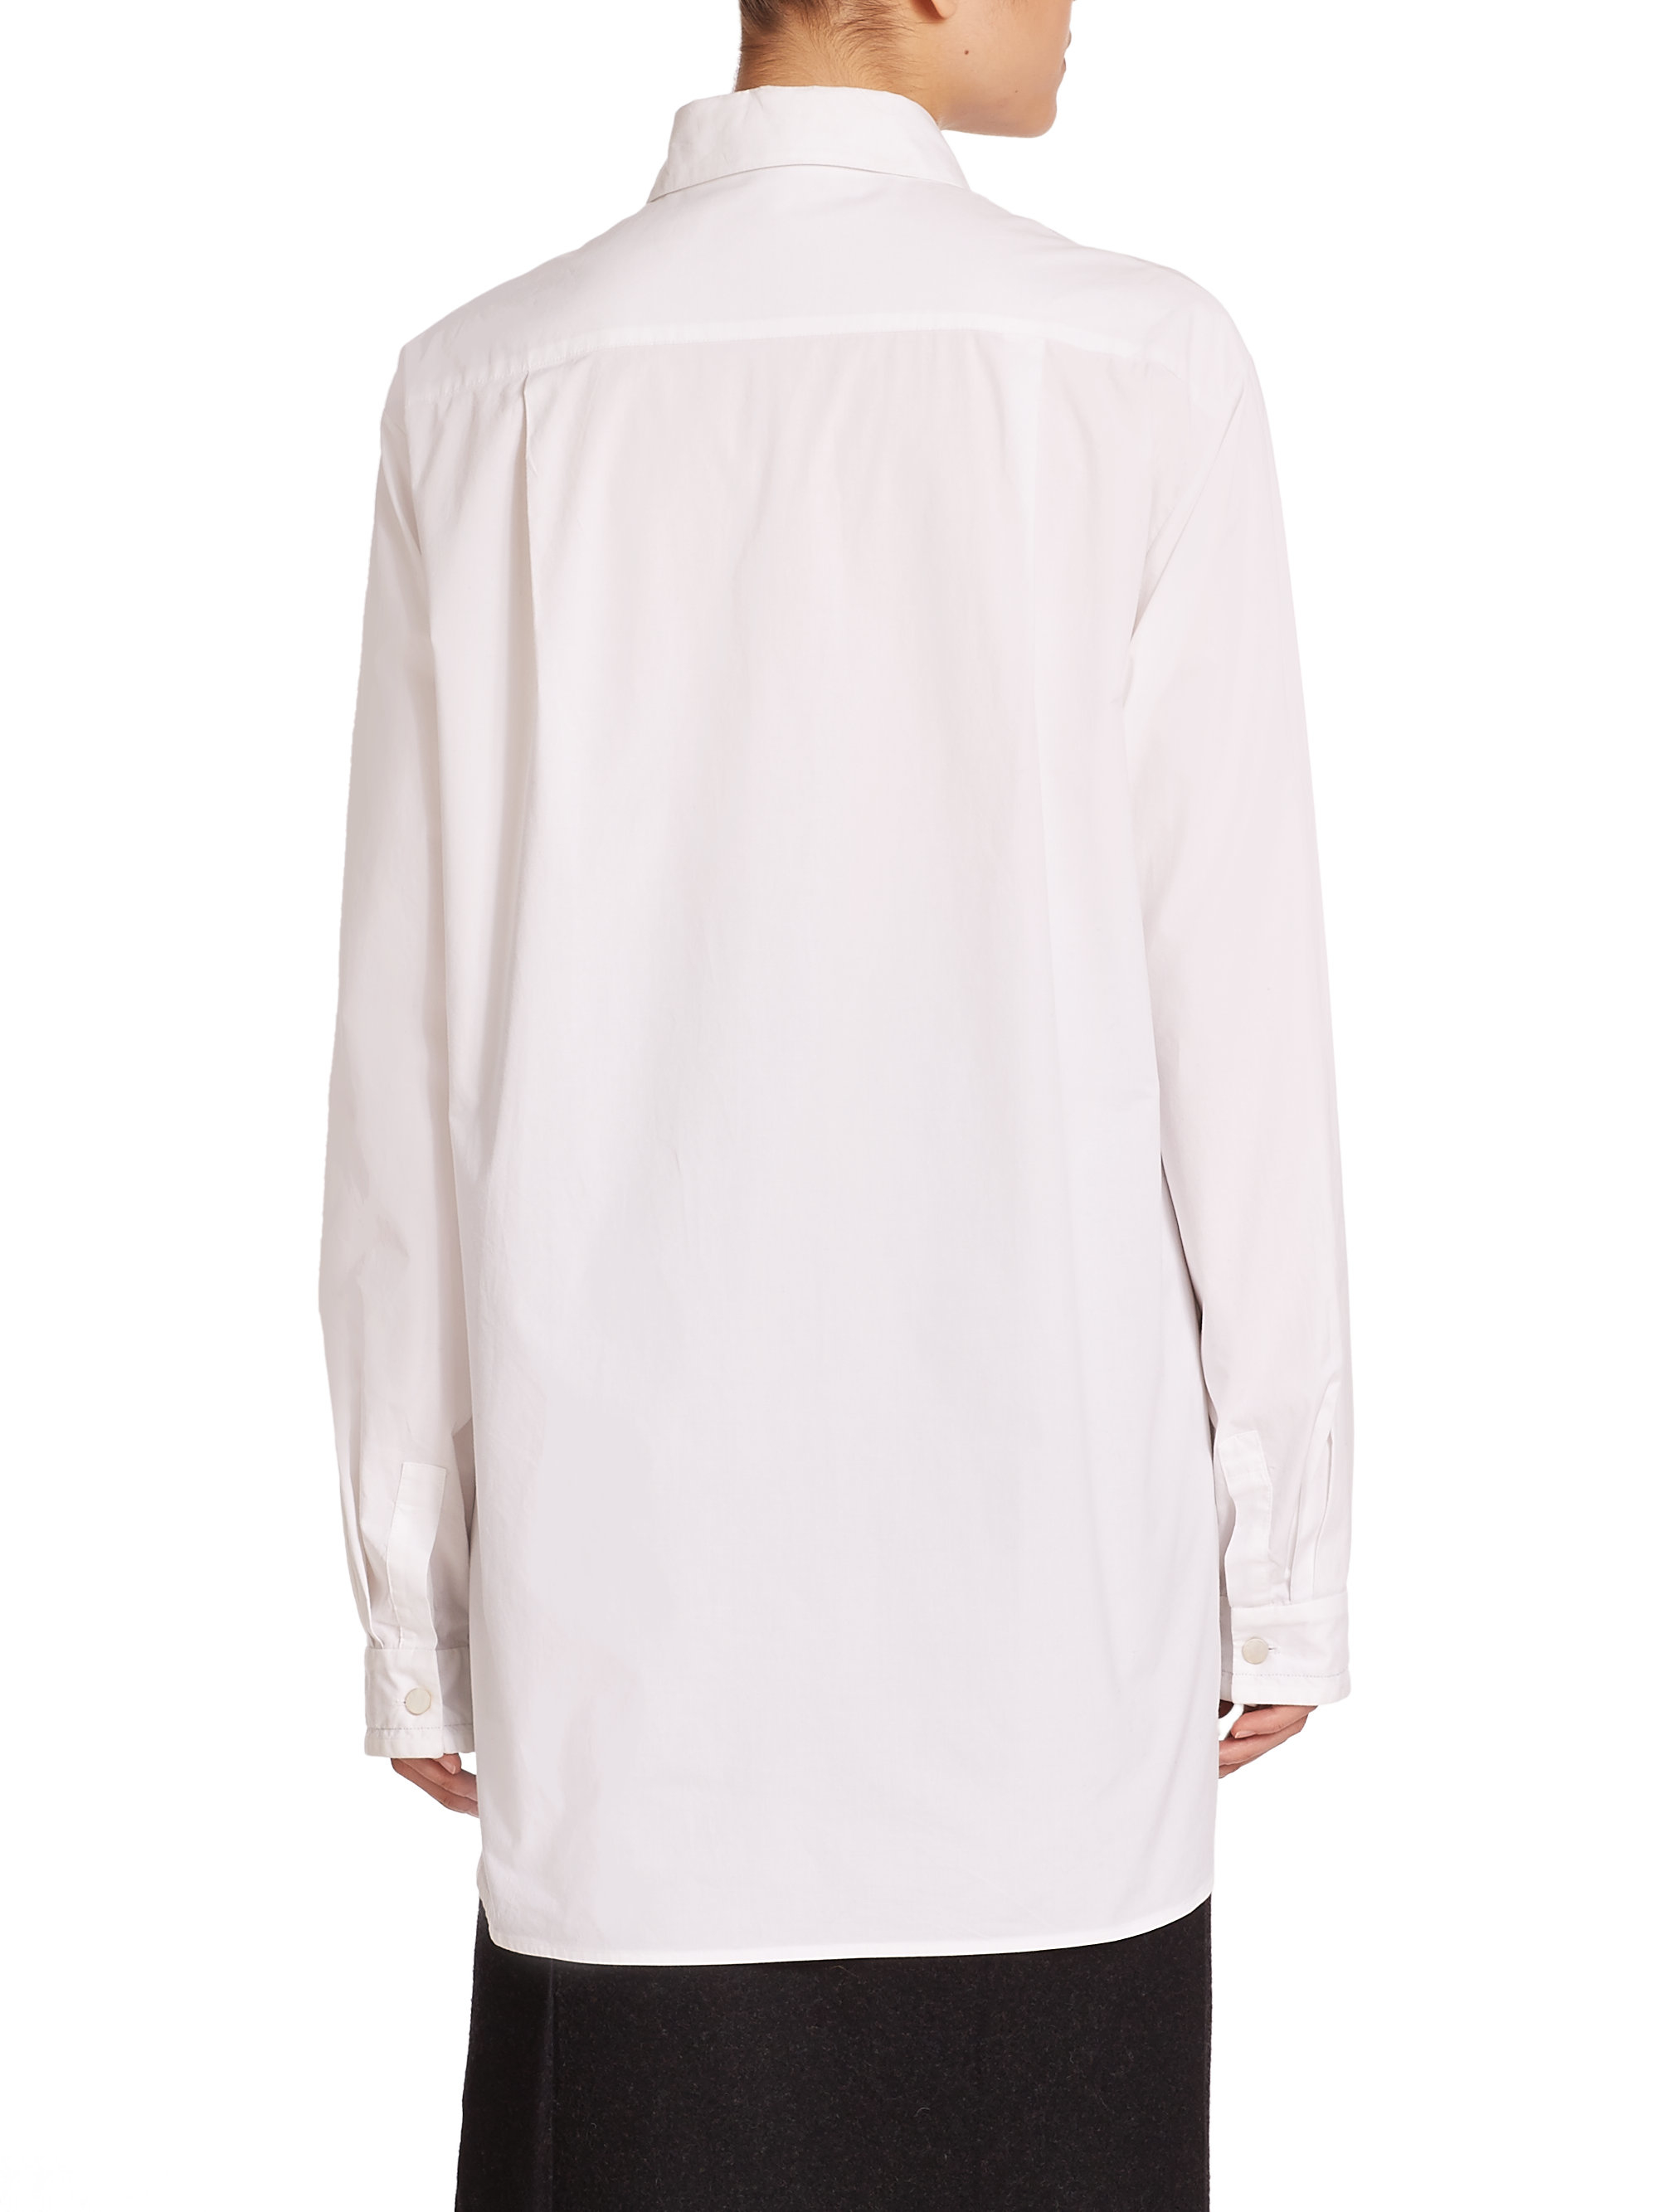 Lyst - The Row Chima Oversized Poplin Shirt in White